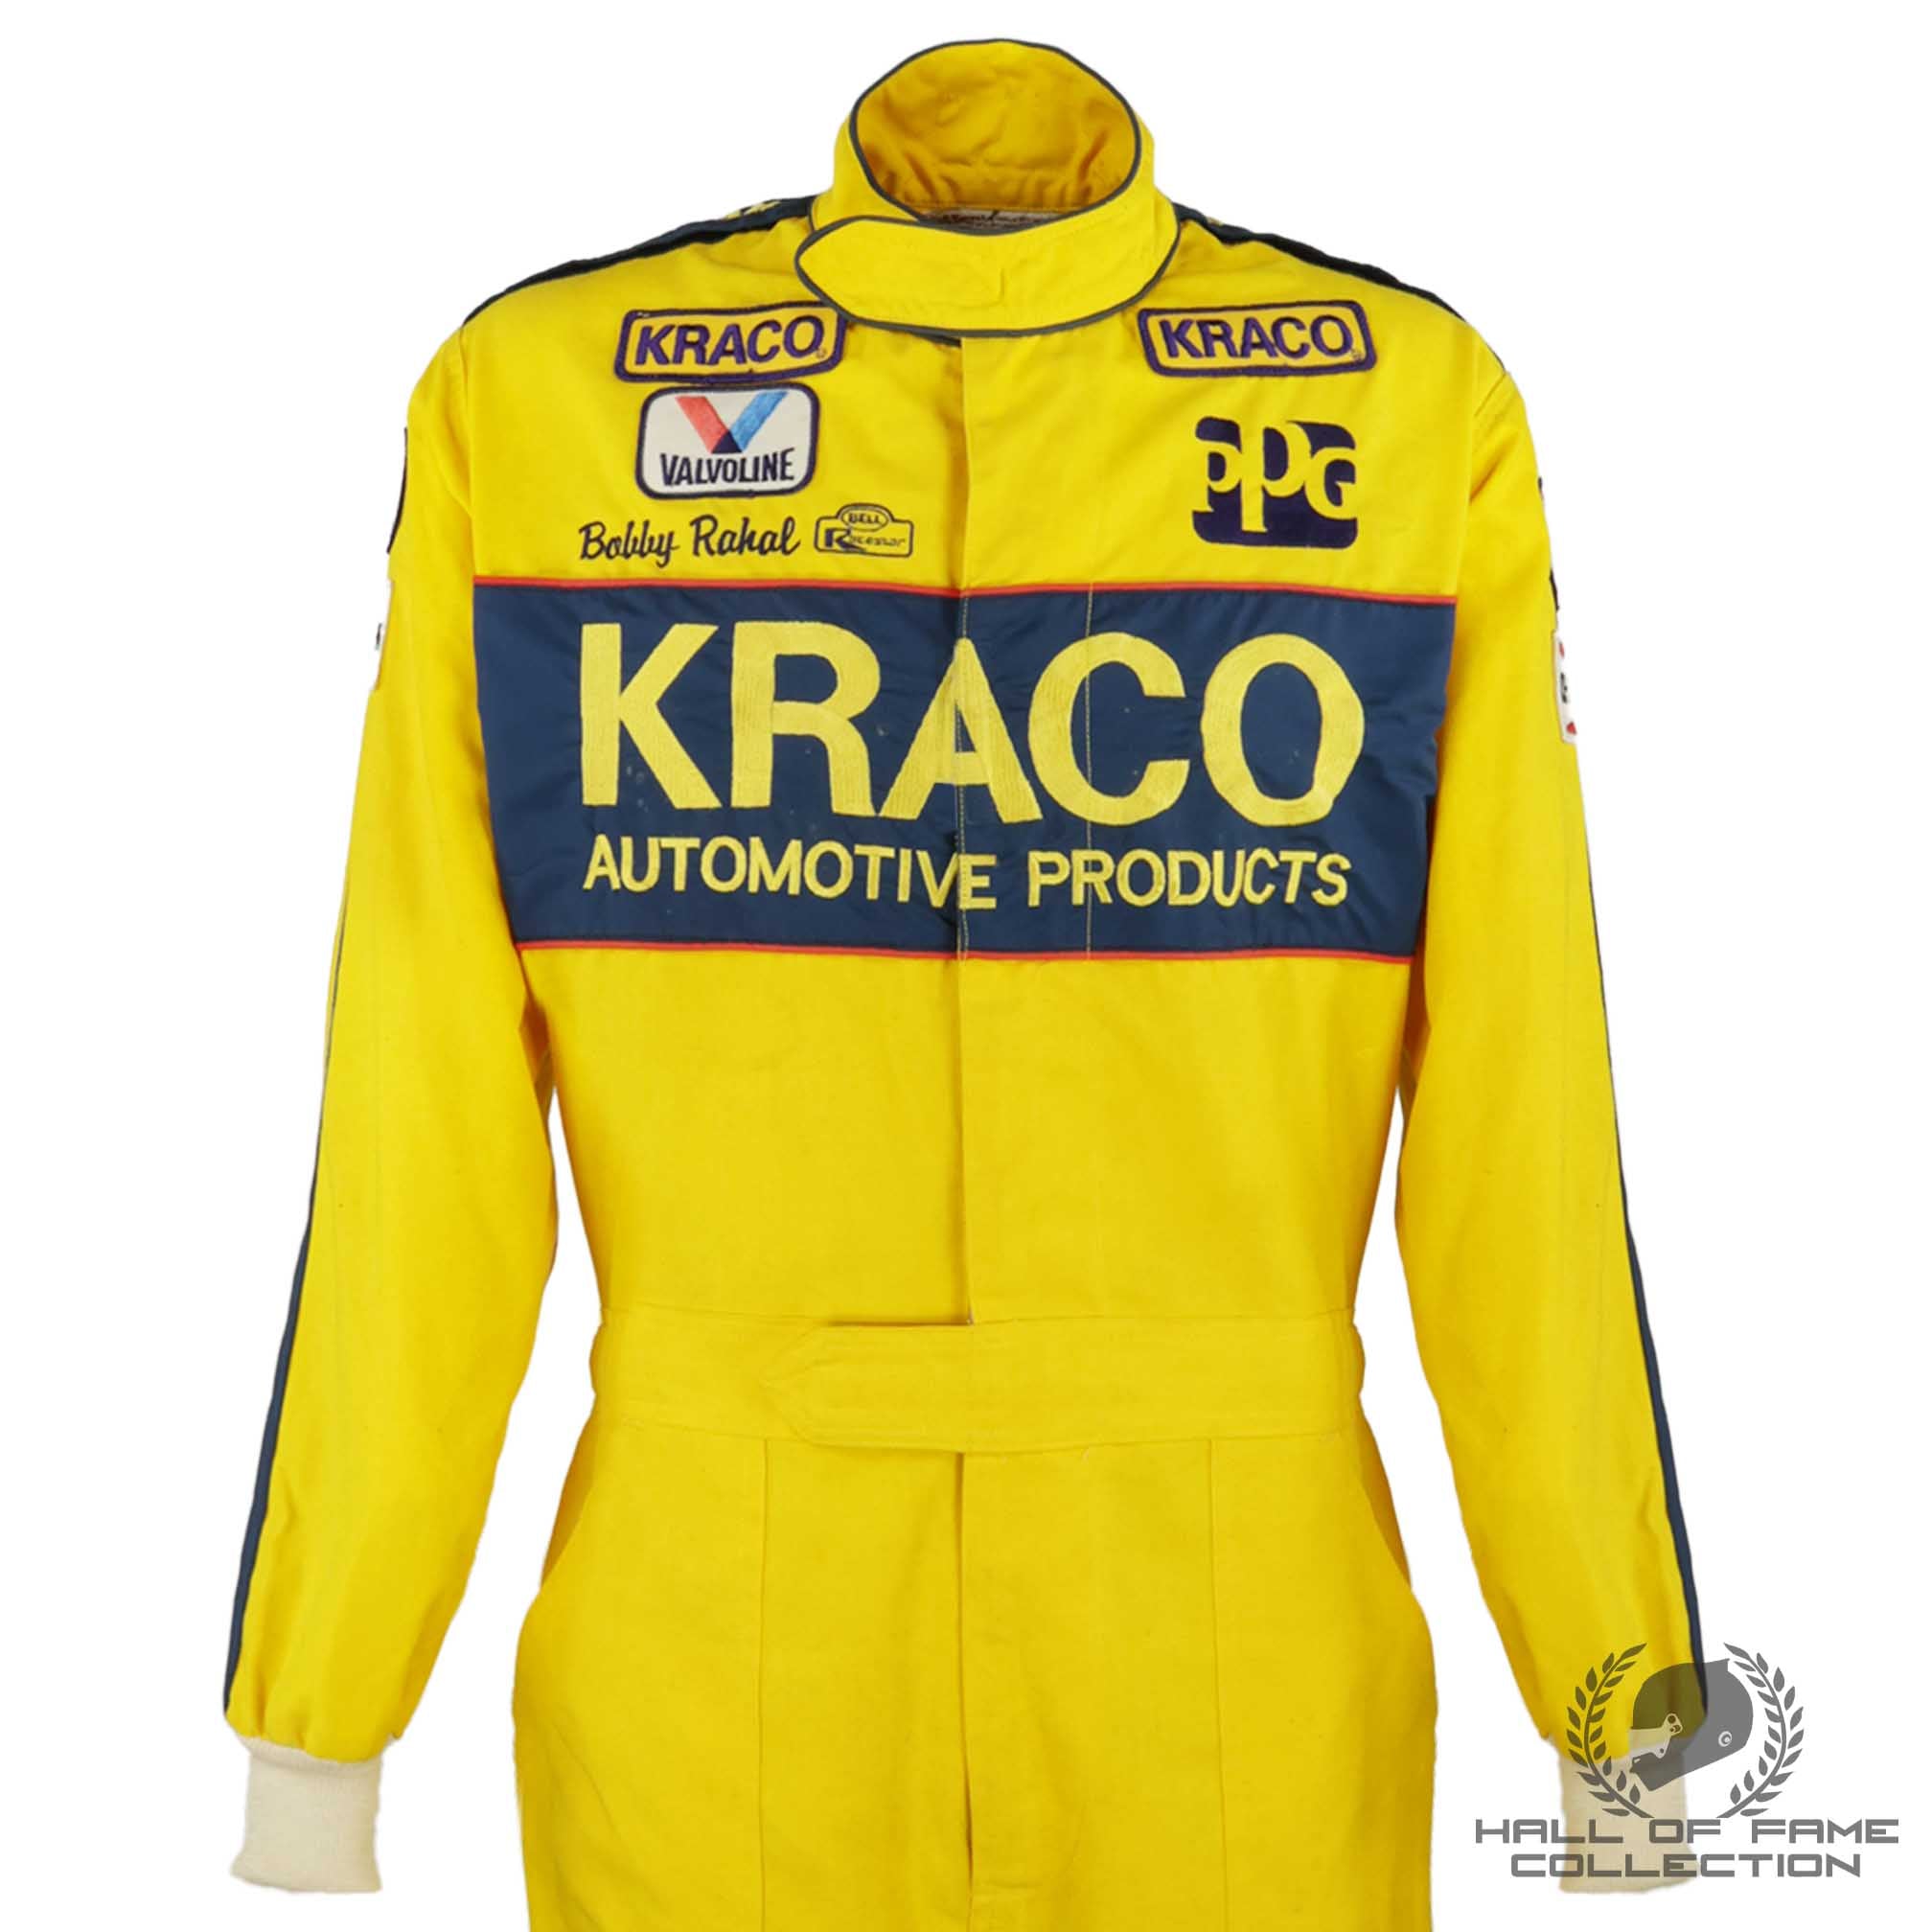 1989 Bobby Rahal Race Used Kraco Racing IndyCar Suit